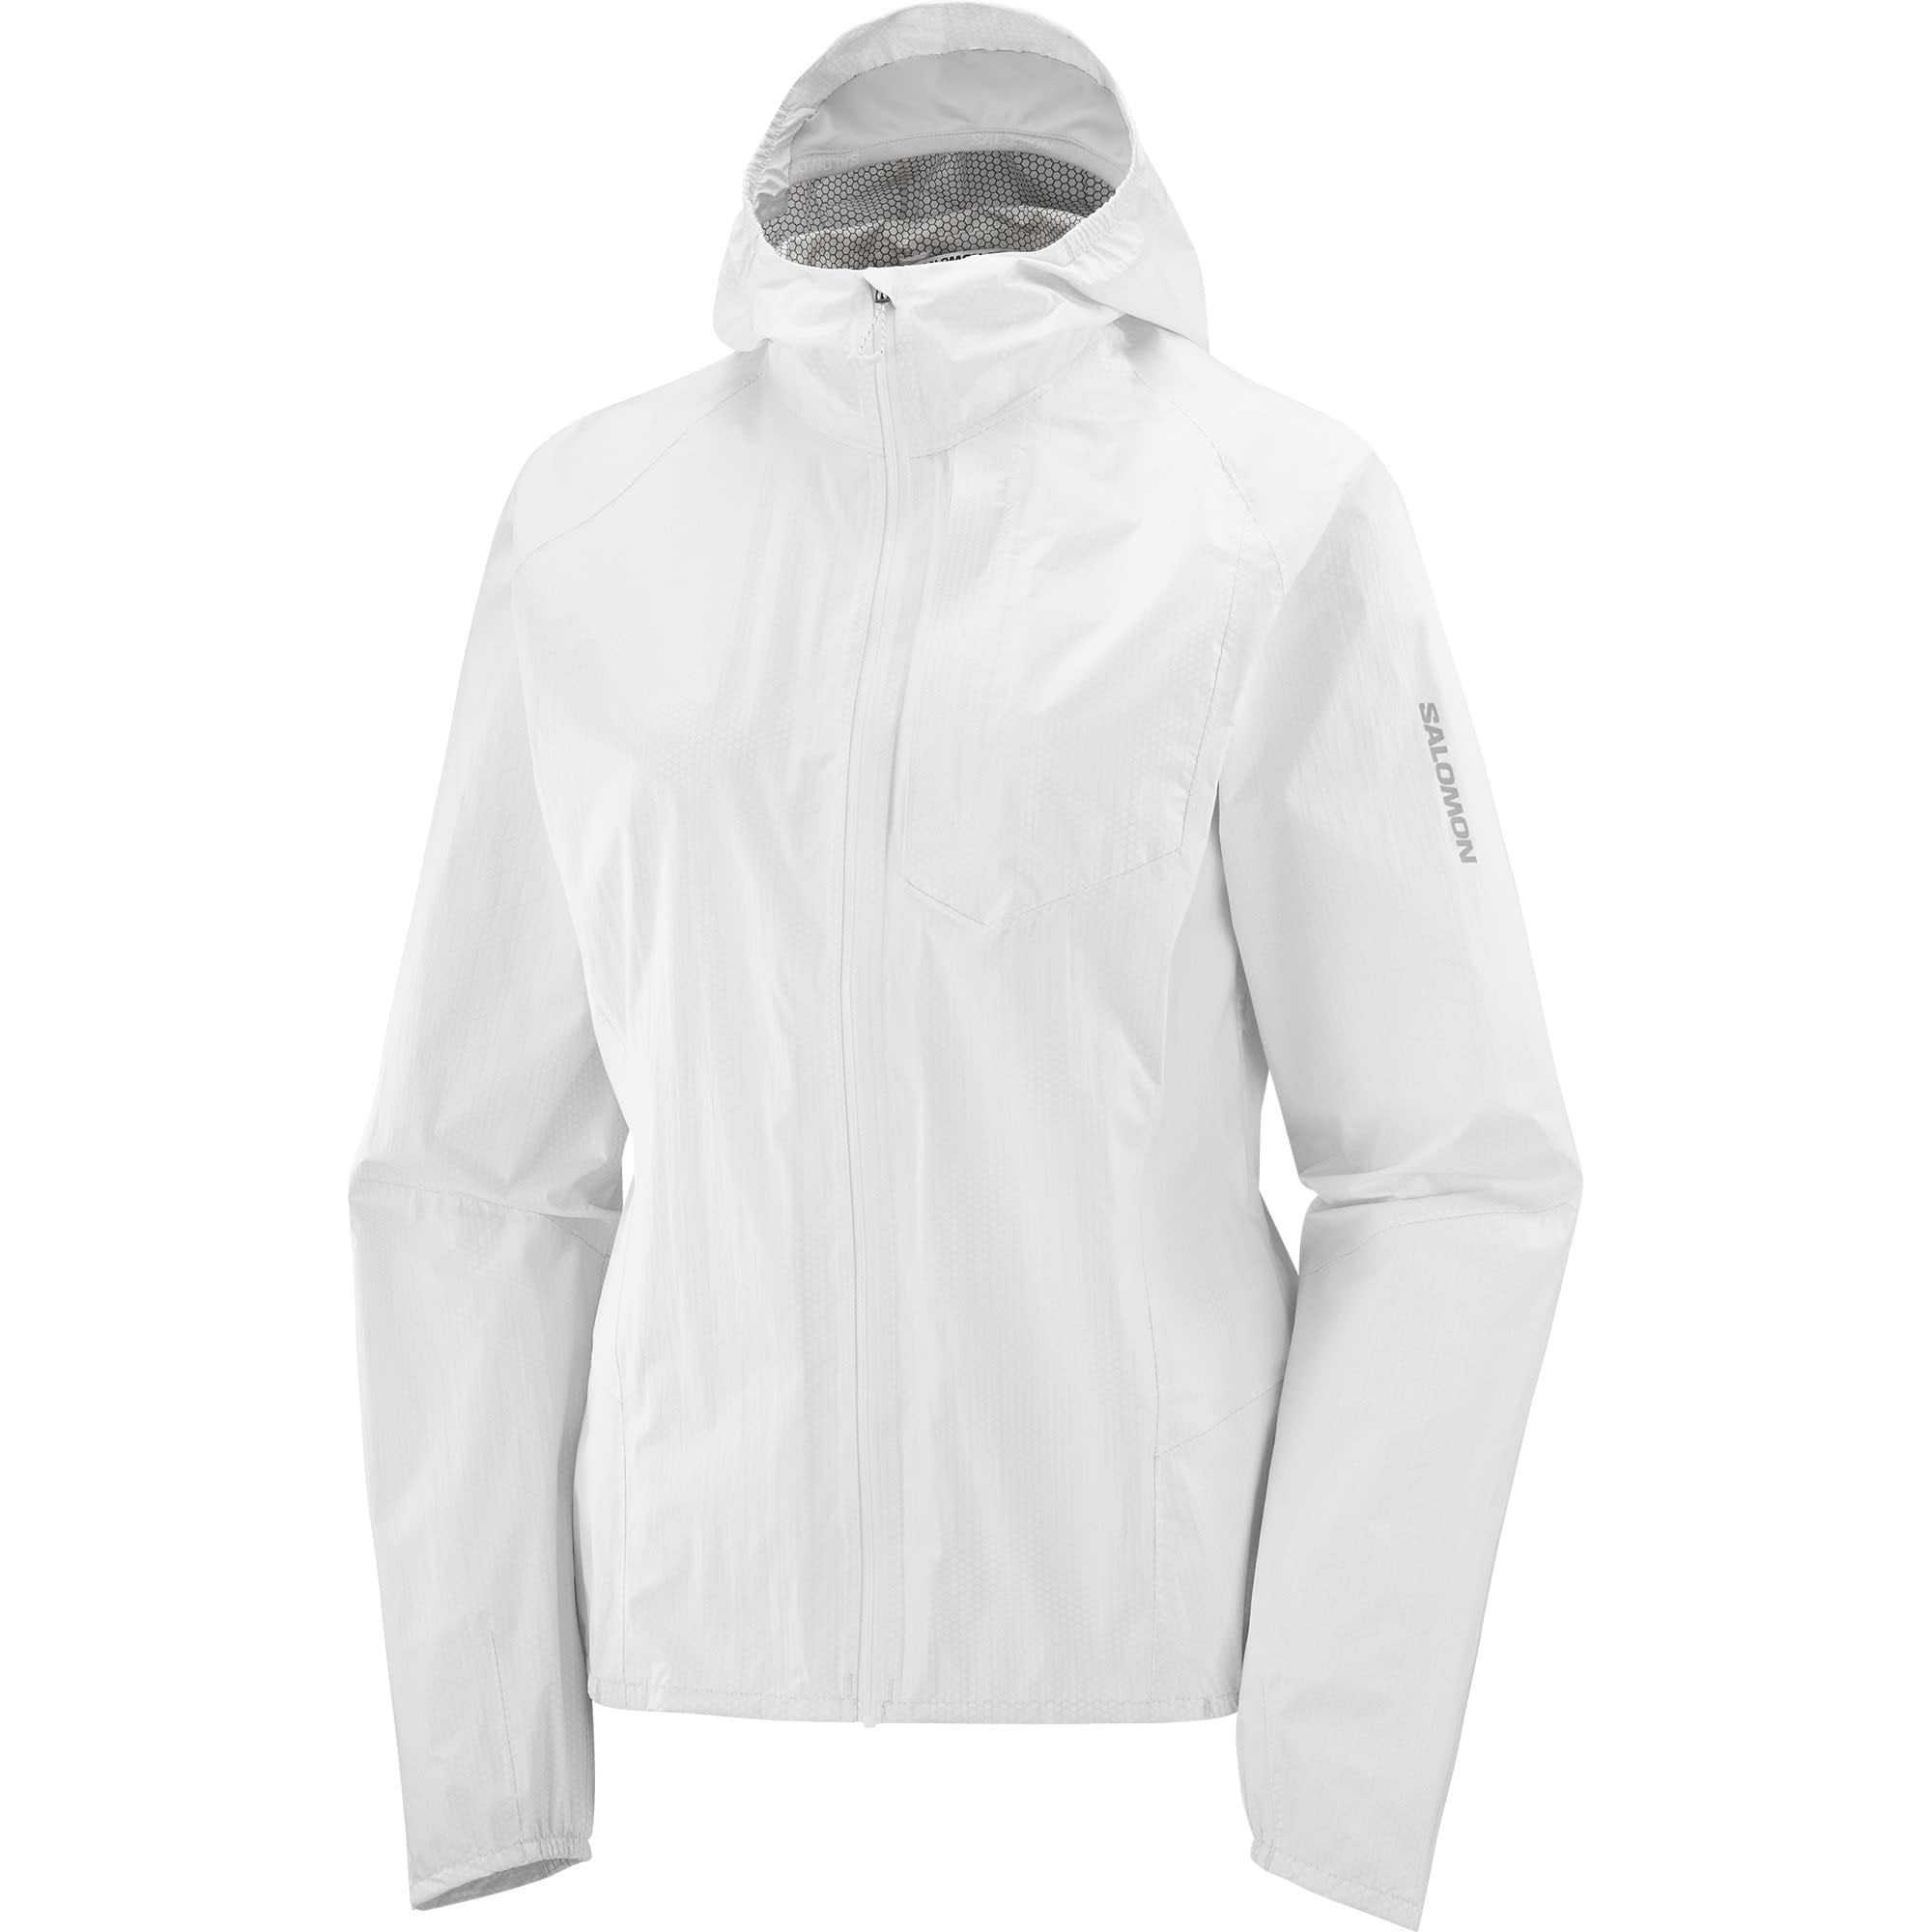 Salomon Women’s Bonatti Waterproof Jacket WHITE